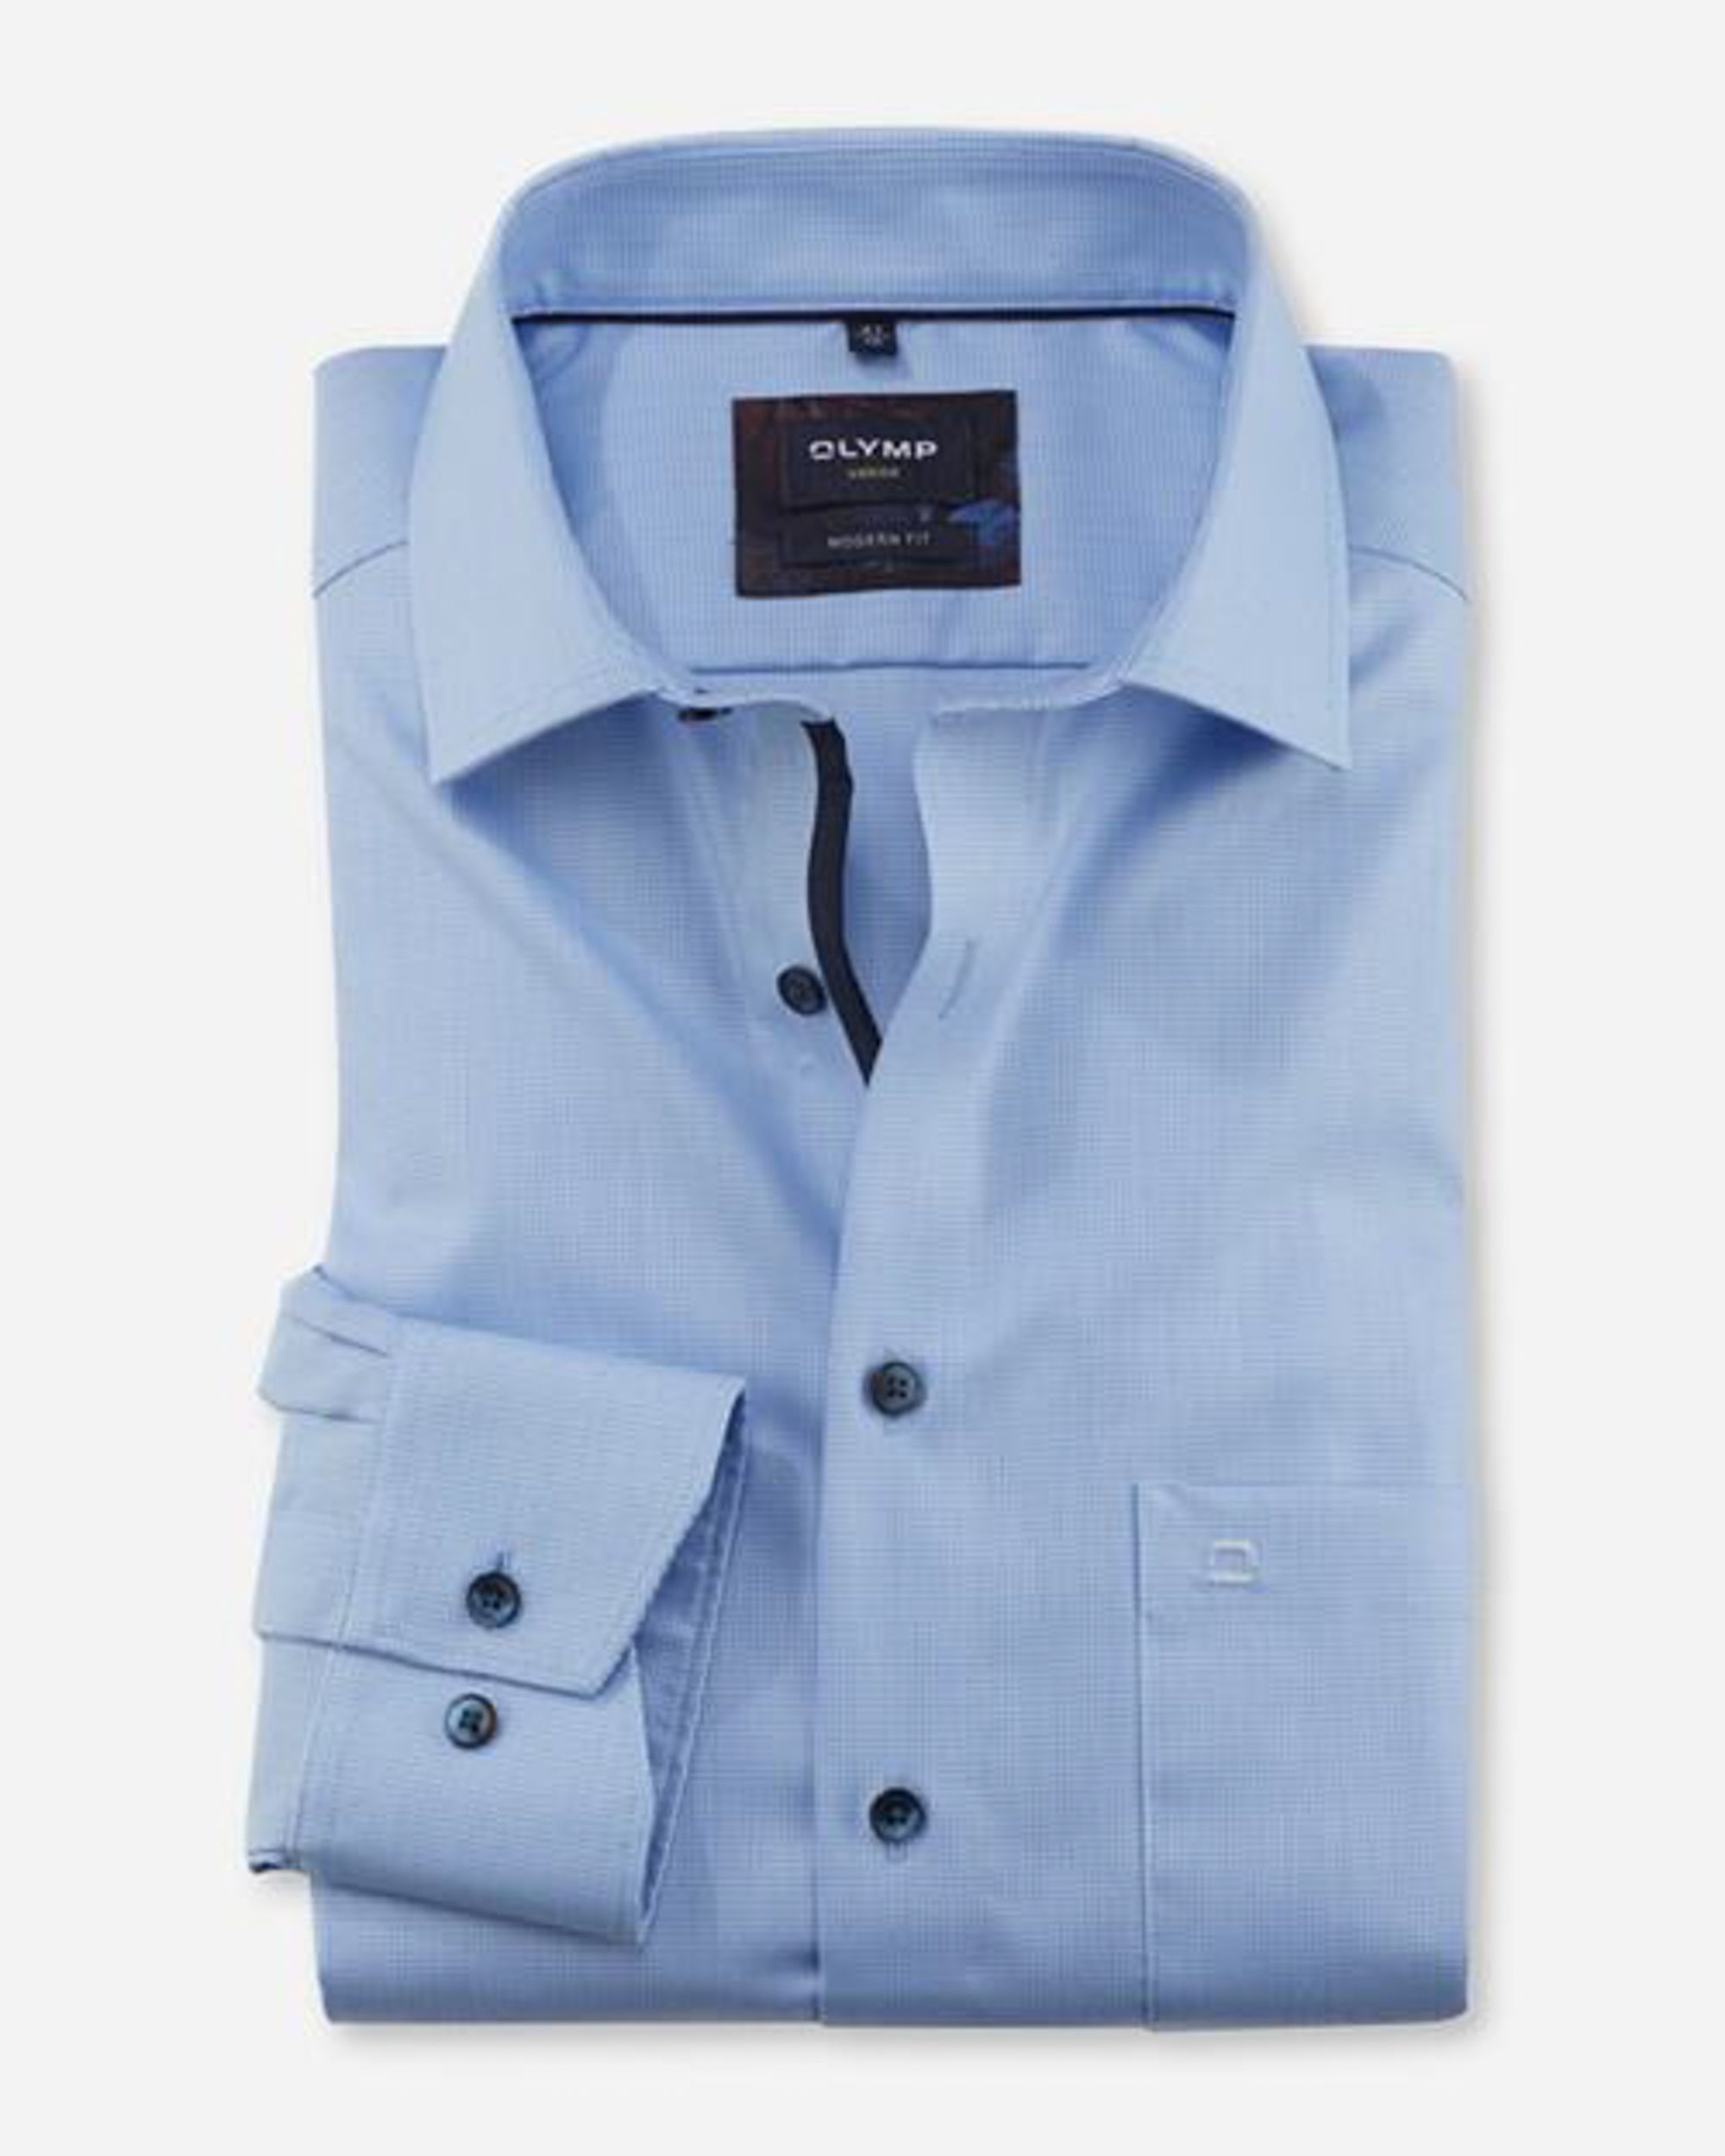 OLYMP Modern Fit Overhemd LM Blauw 080220-001-47